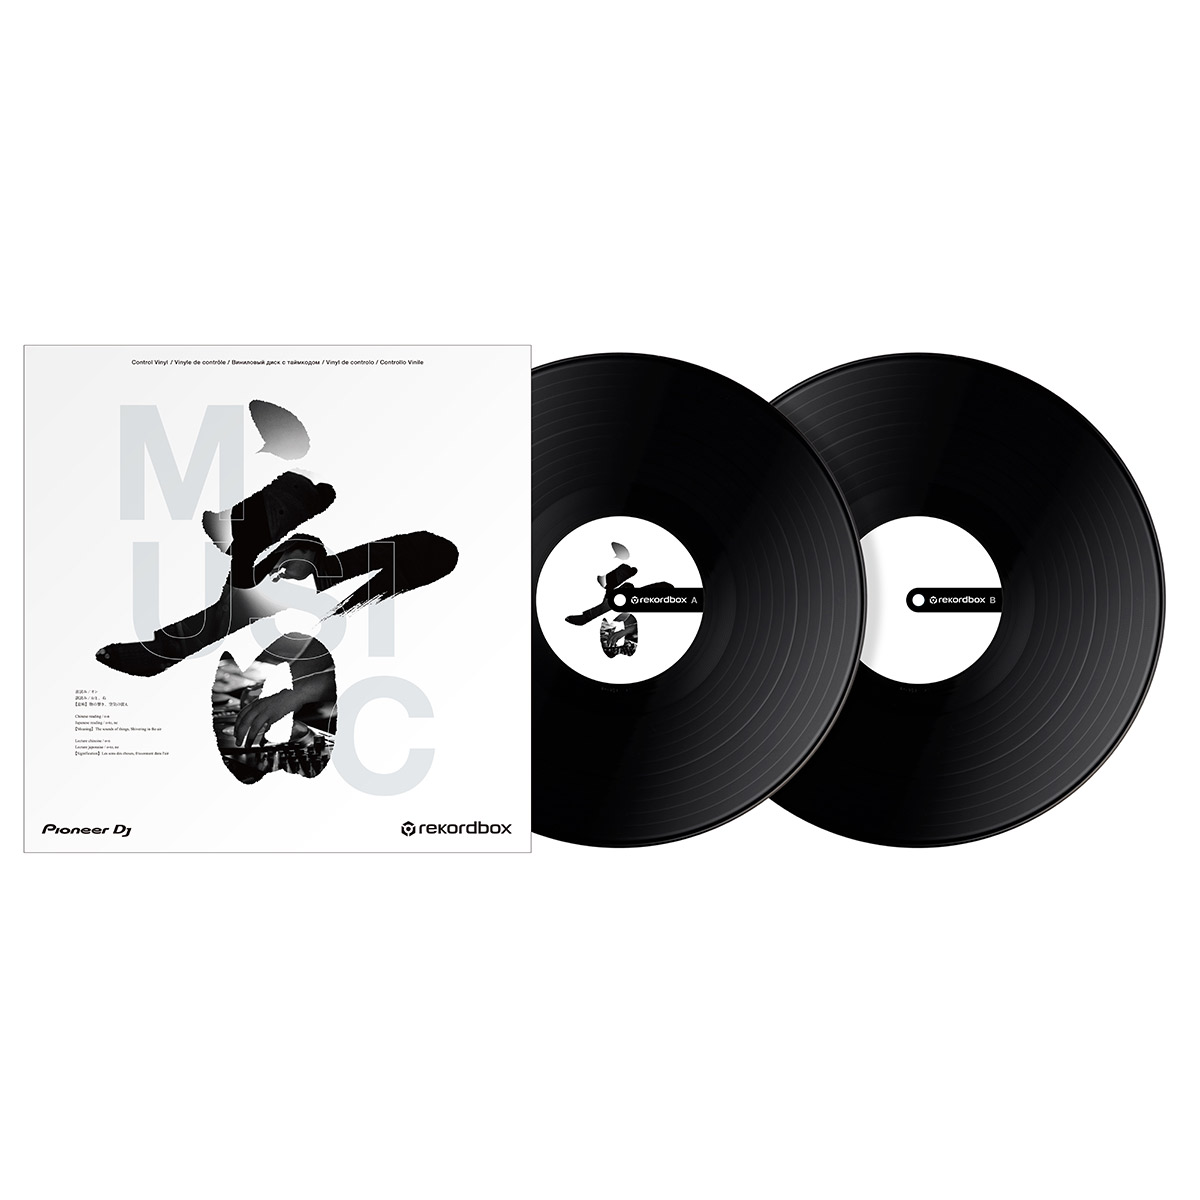 Pioneer DJ rekordbox専用 Control Vinyl ブラック MUSIC(音) 2枚